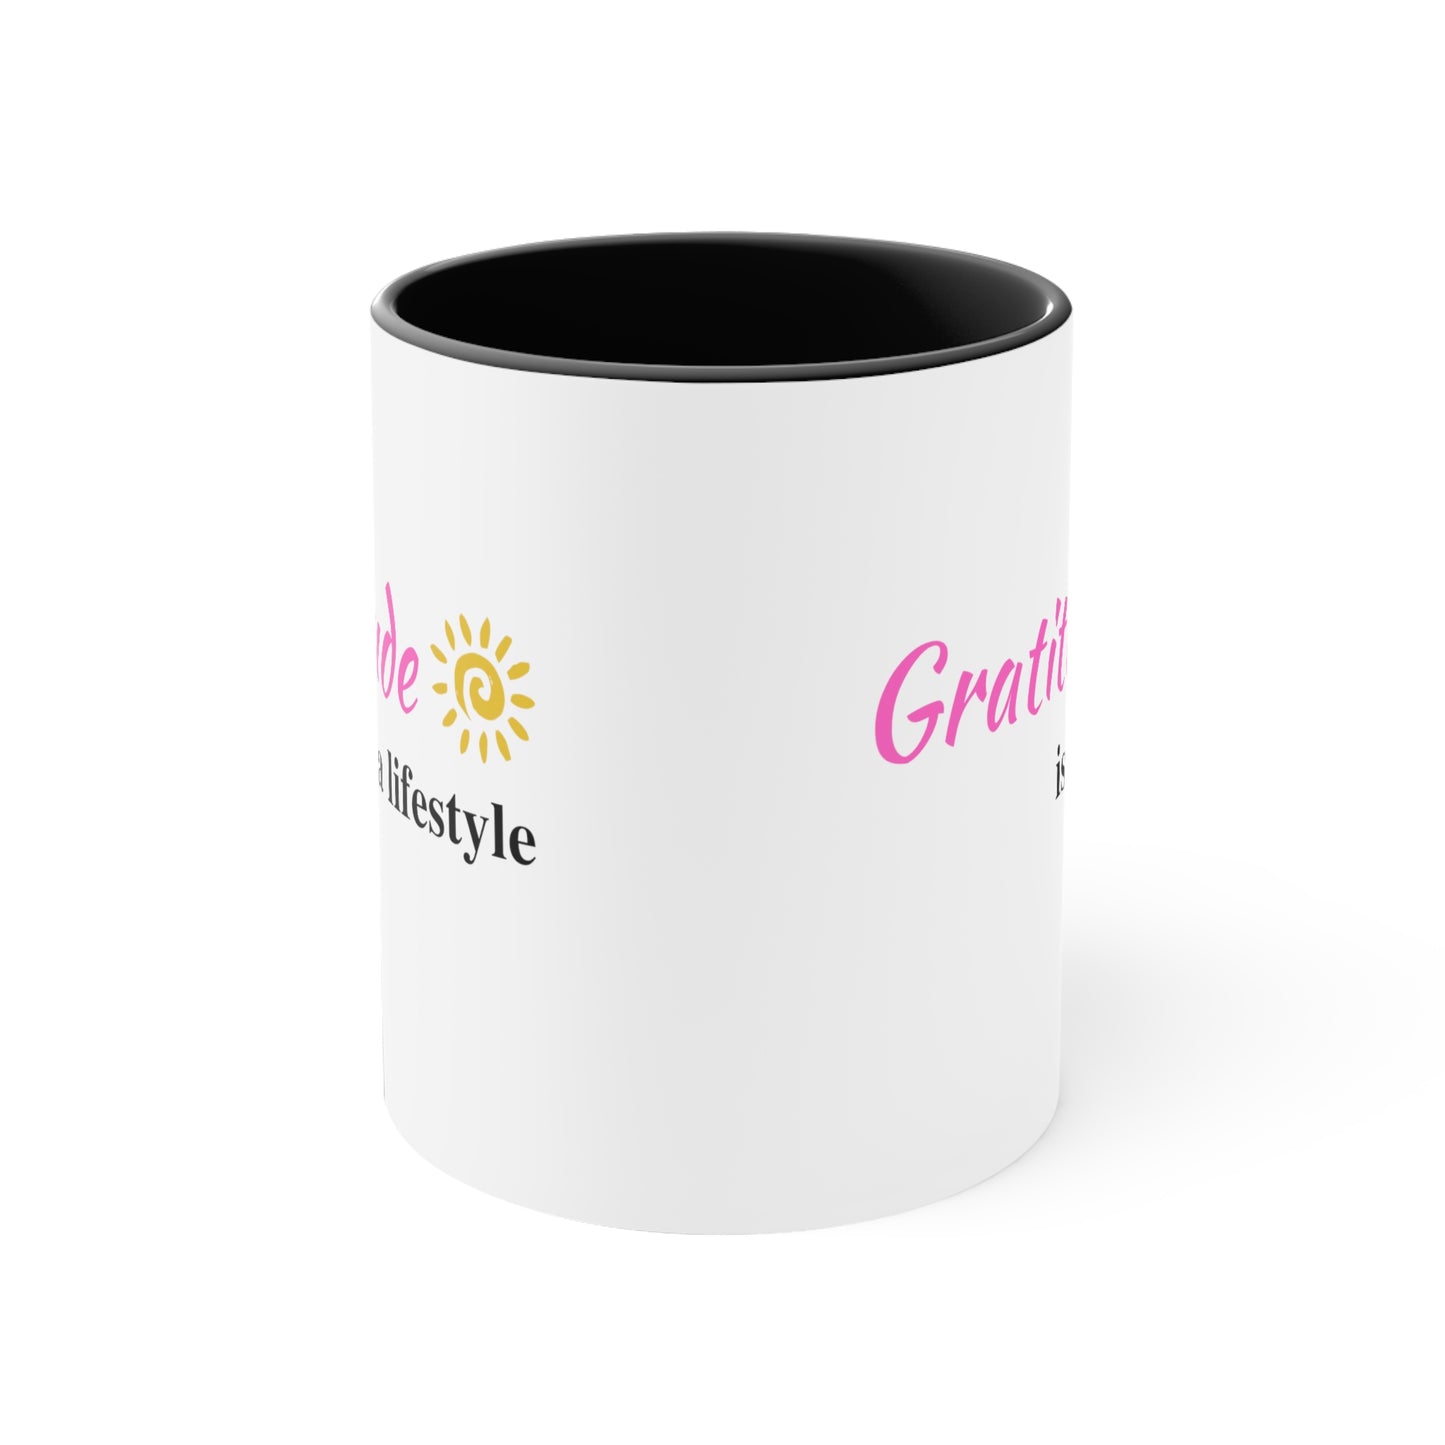 Gratitude is a Lifestyle Coffee Mug White Ceramic (Pink Text) Black Handle & Interior, 11oz;Thankful;Inspiration;Motivation;Mom;Daughter